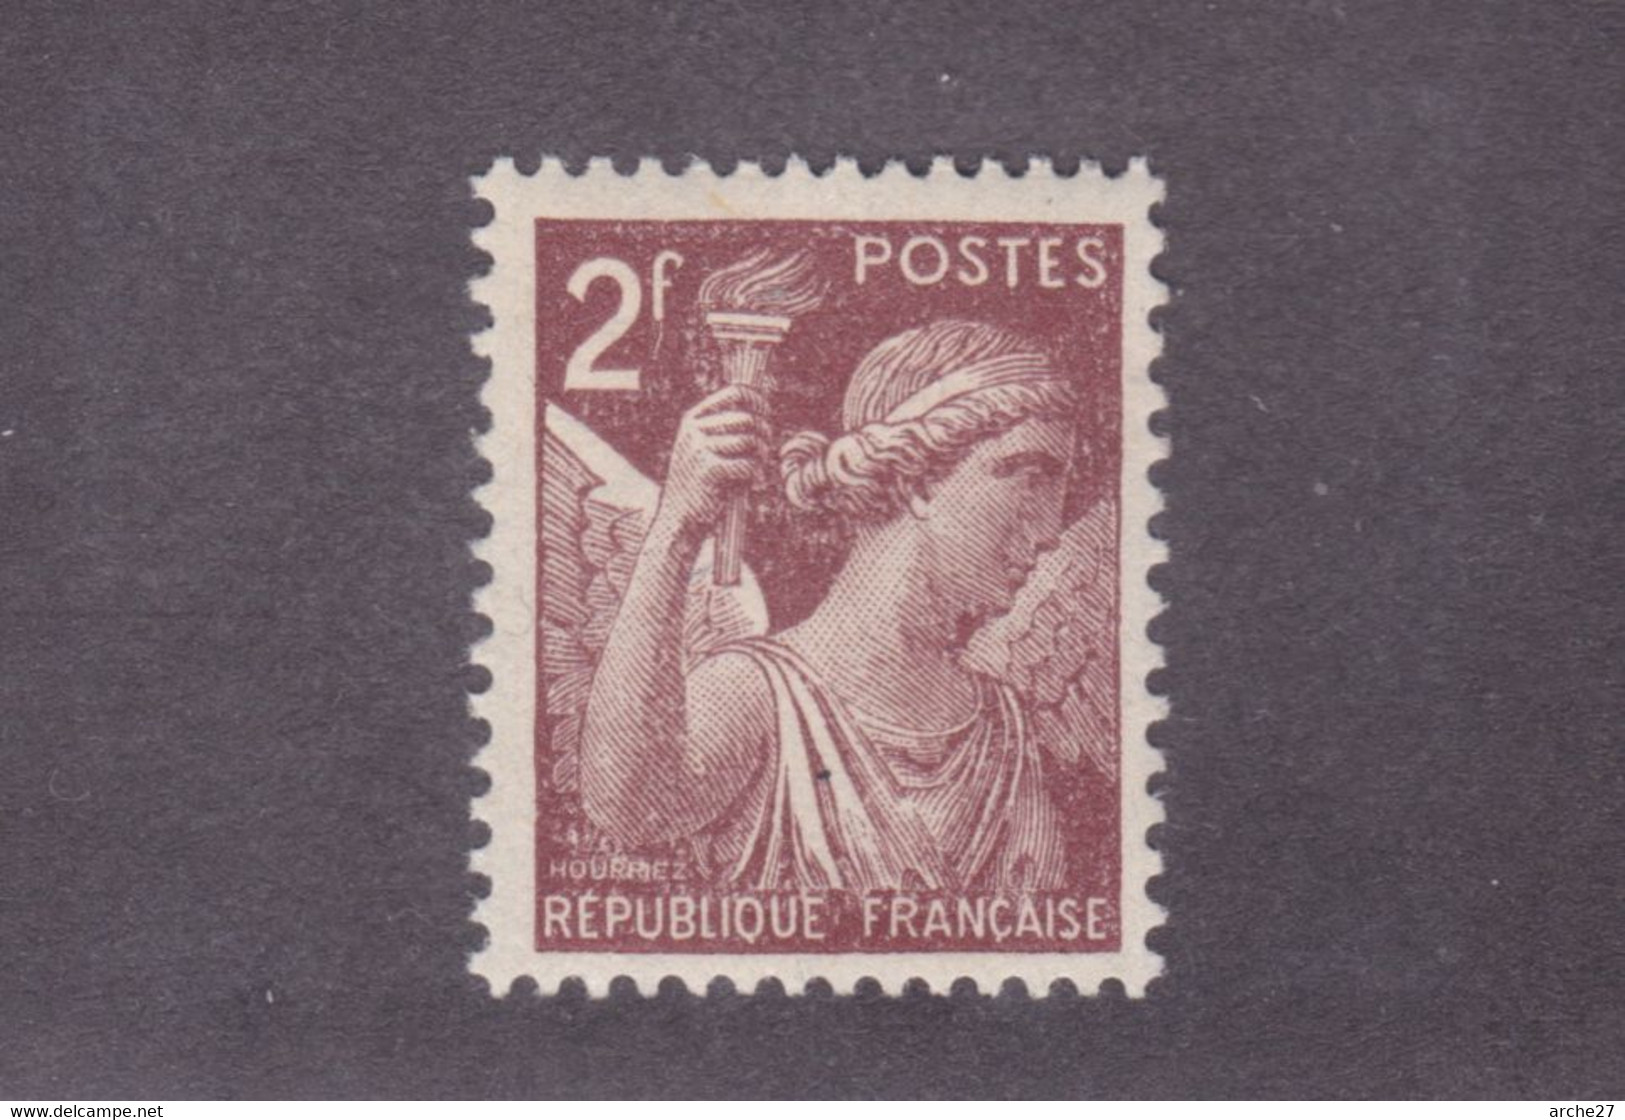 TIMBRE FRANCE N° 653 NEUF ** - 1944 Gallo E Marianna Di Algeri